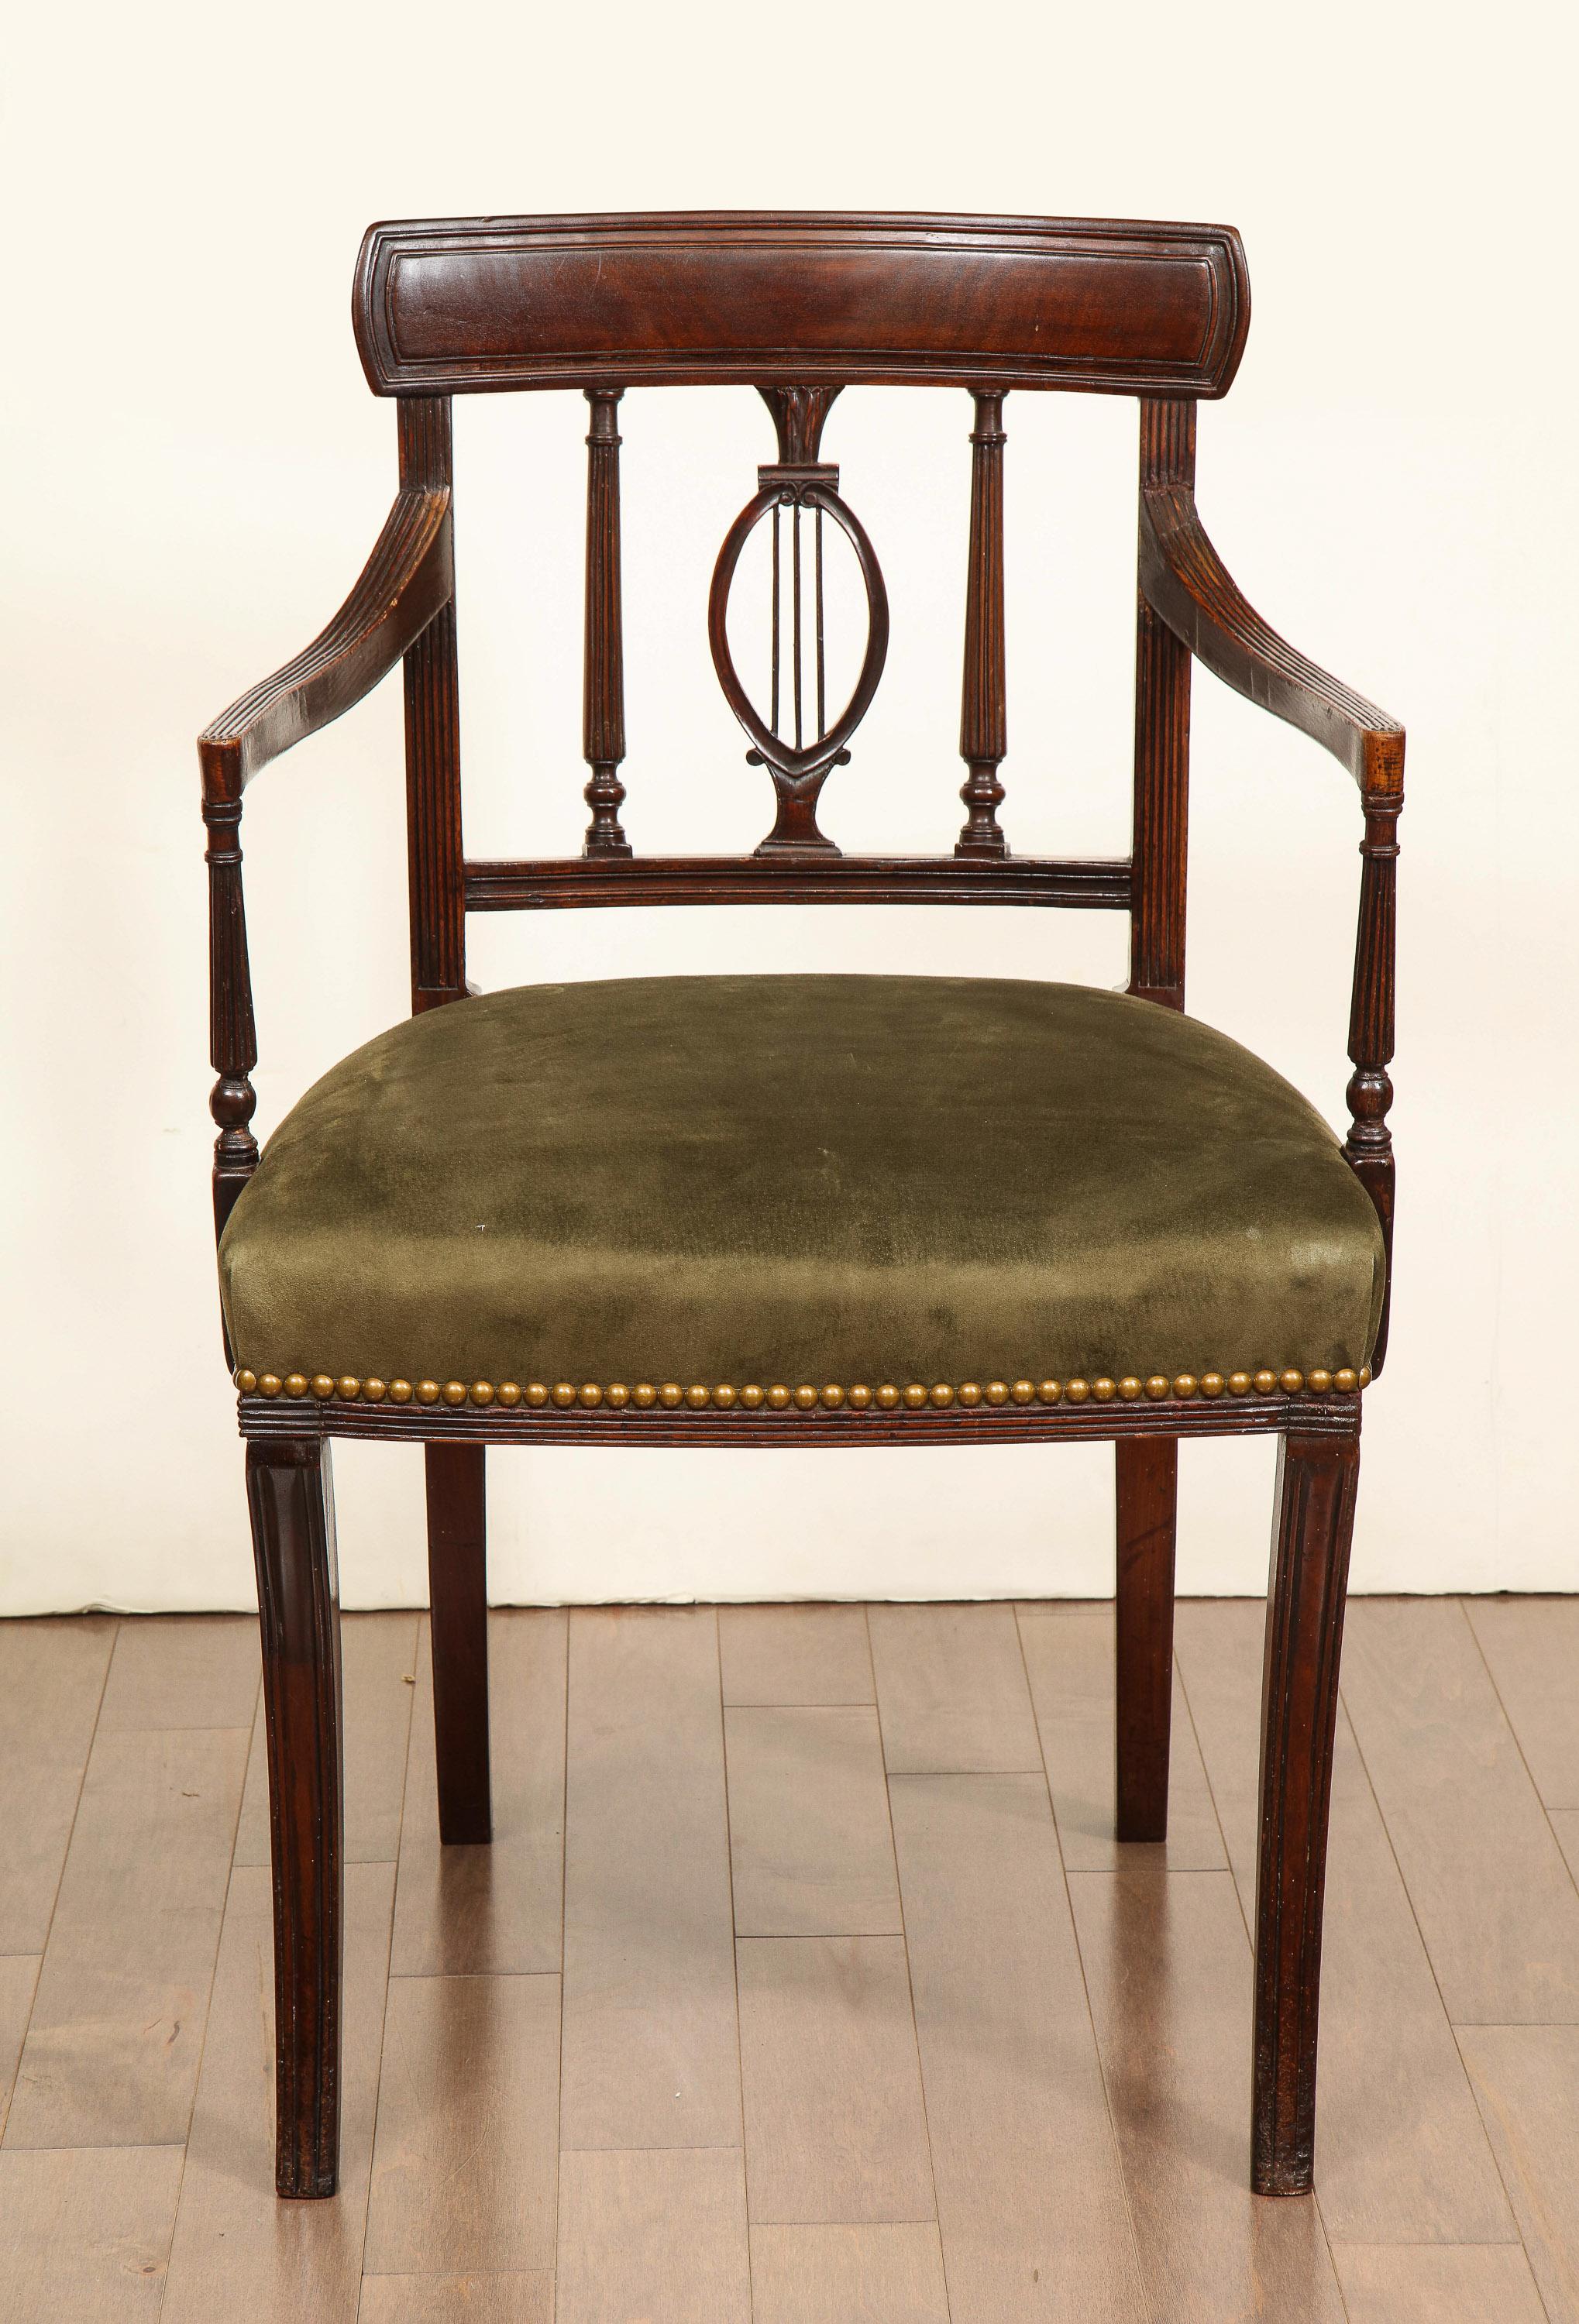 19th century English classical armchair.